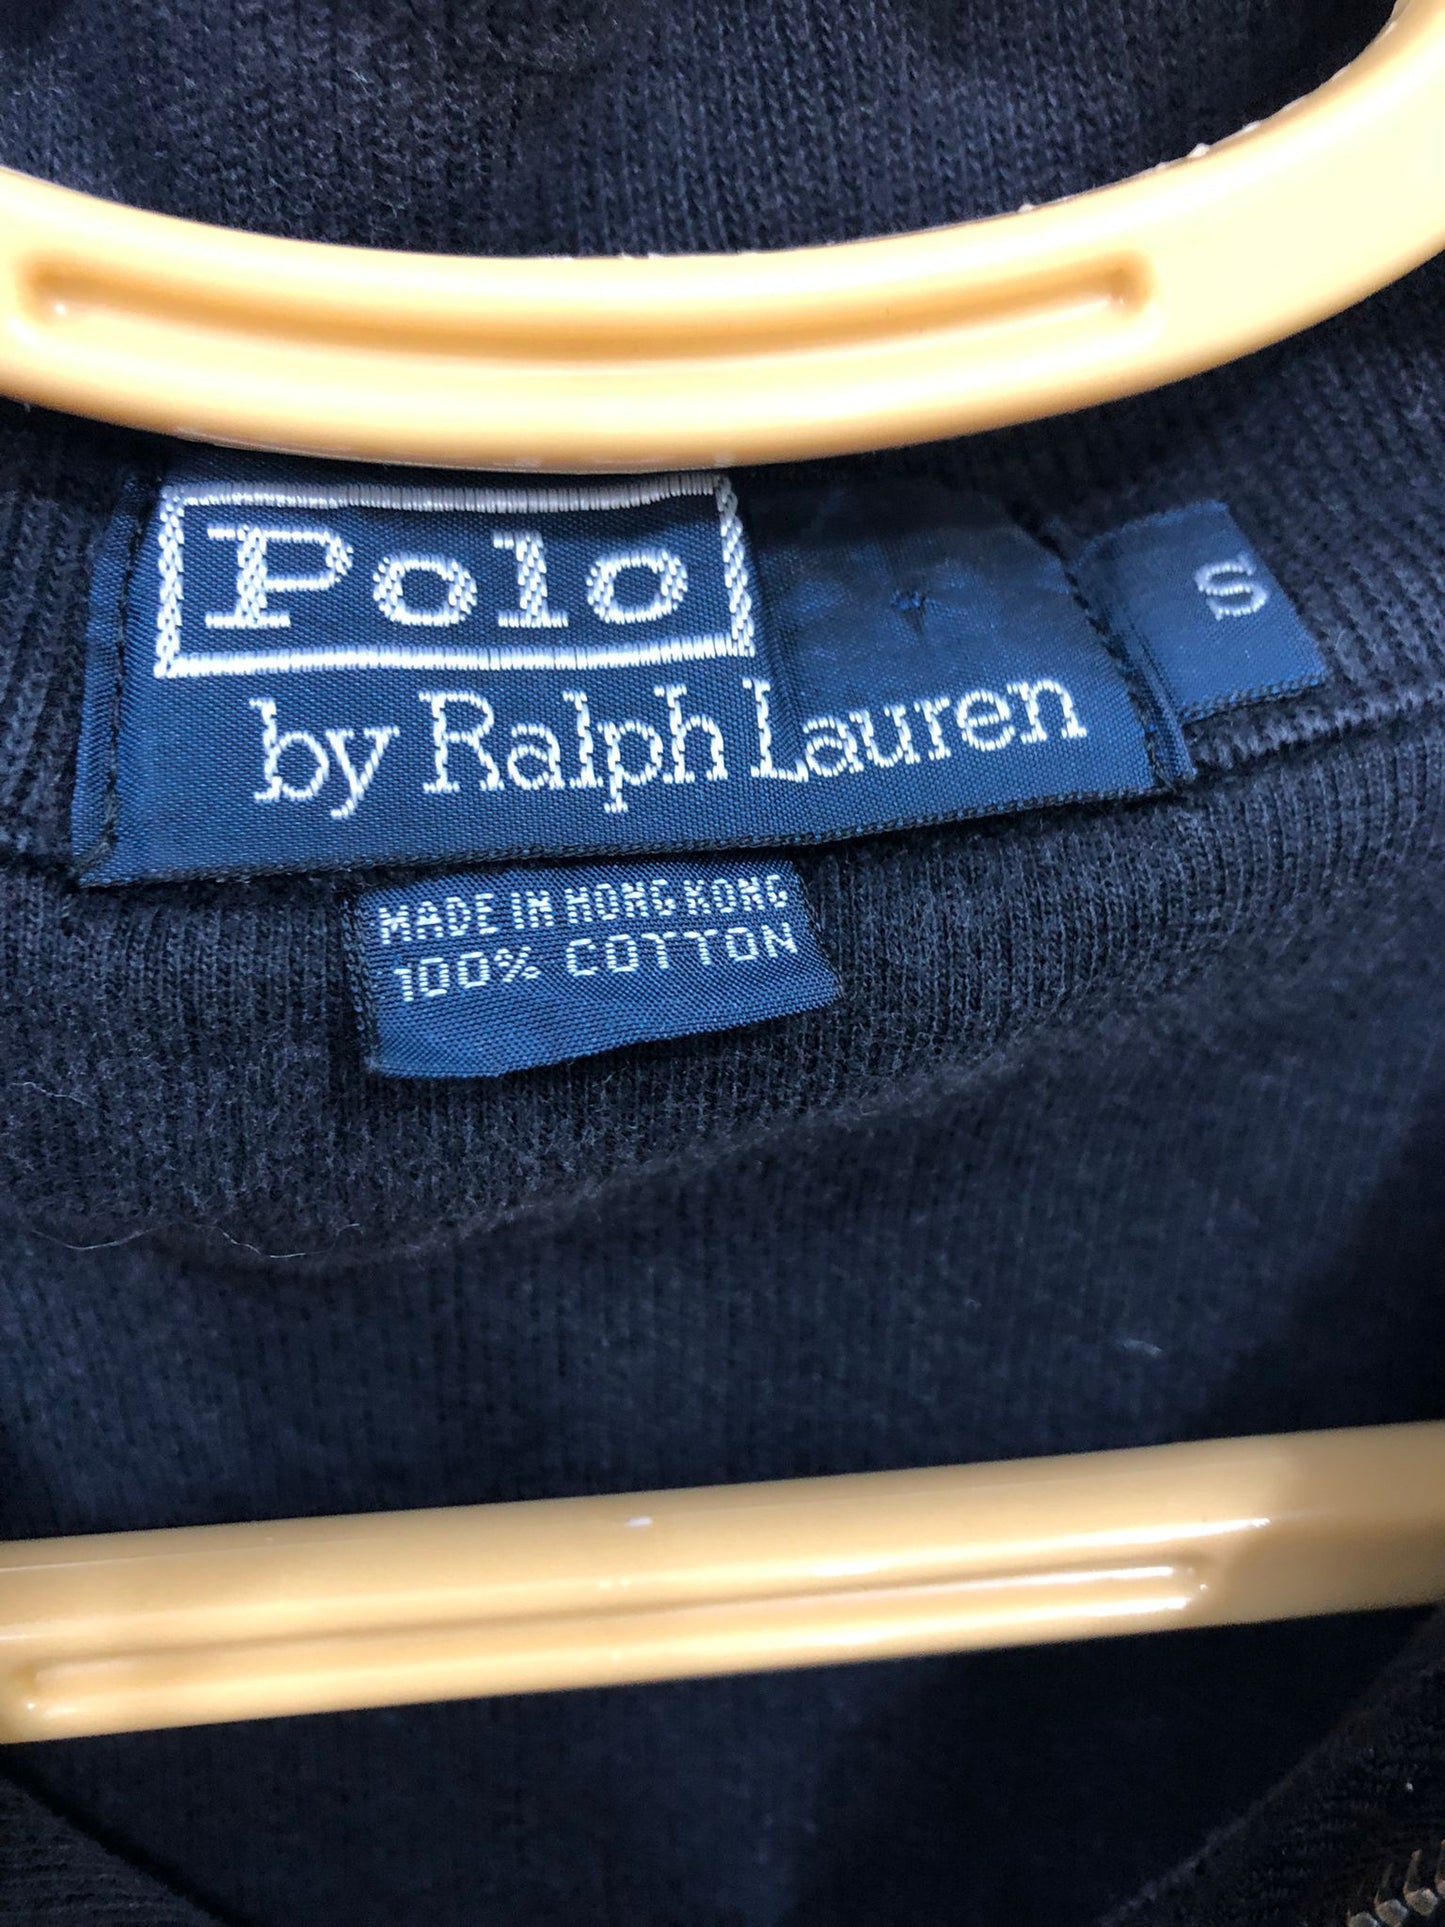 100x Authentic Polo Ralph Lauren Sweaters